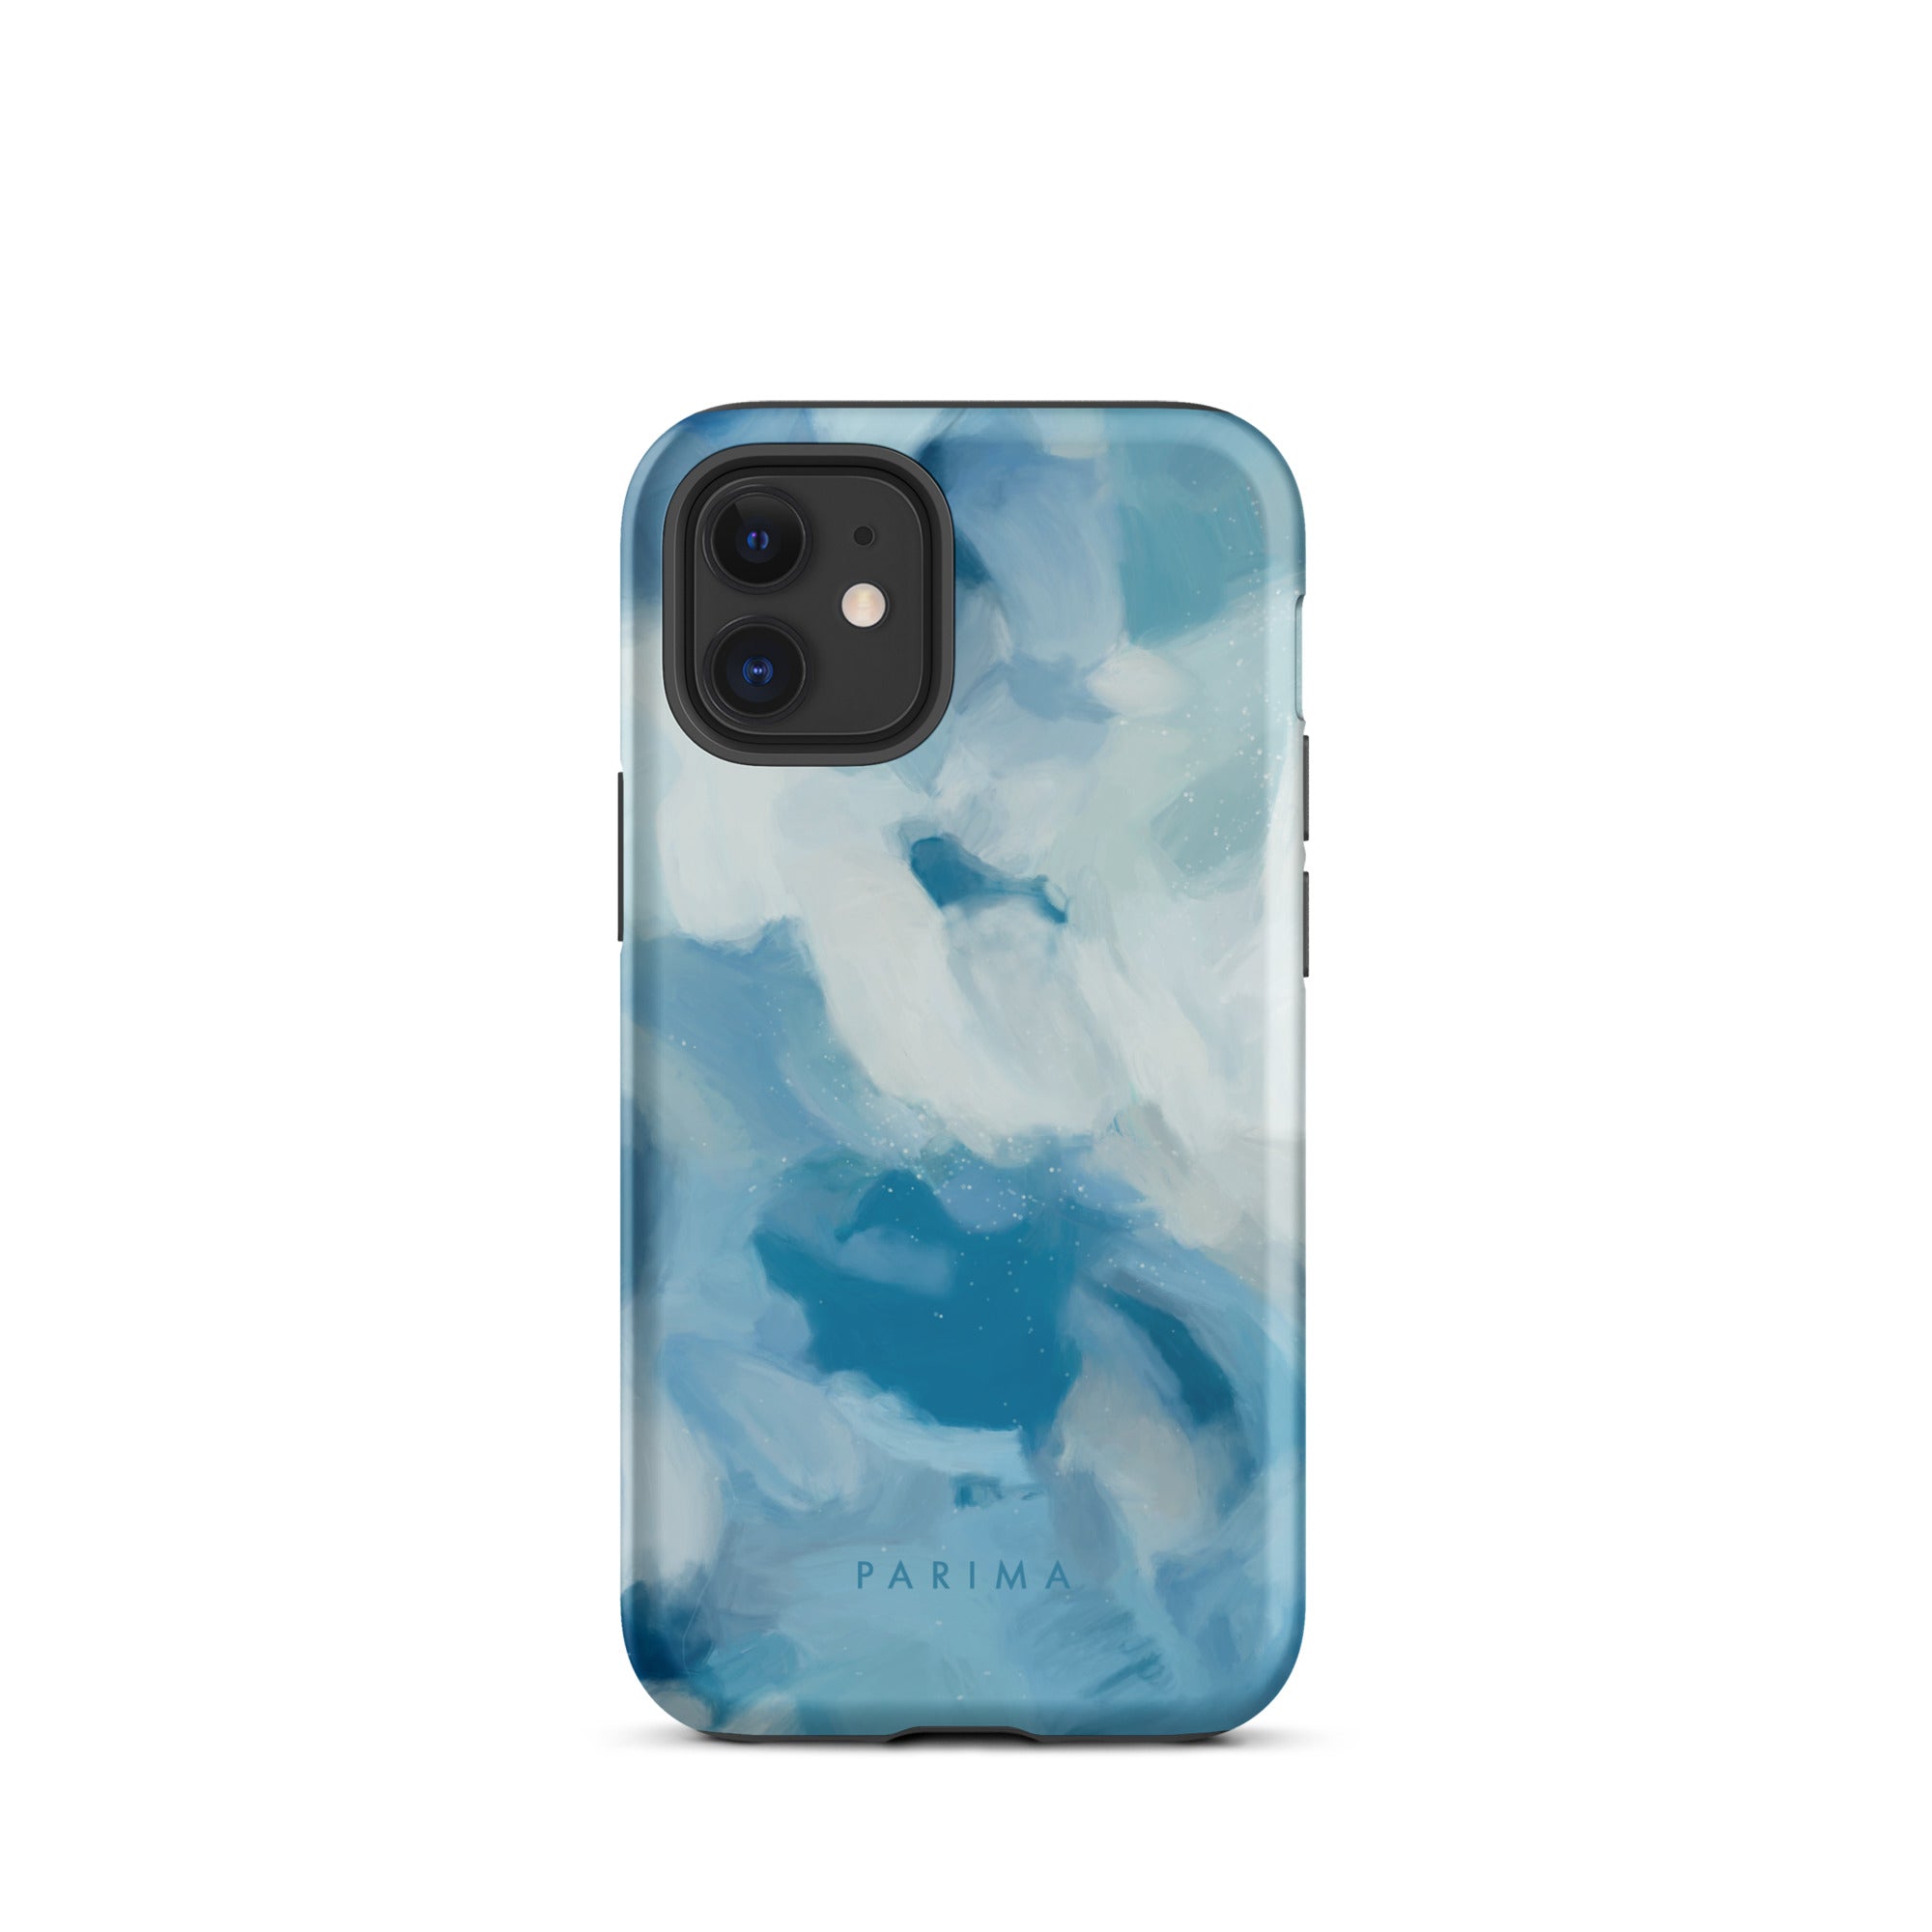 Liviana, blue abstract art - iPhone 12 mini tough case by Parima Studio